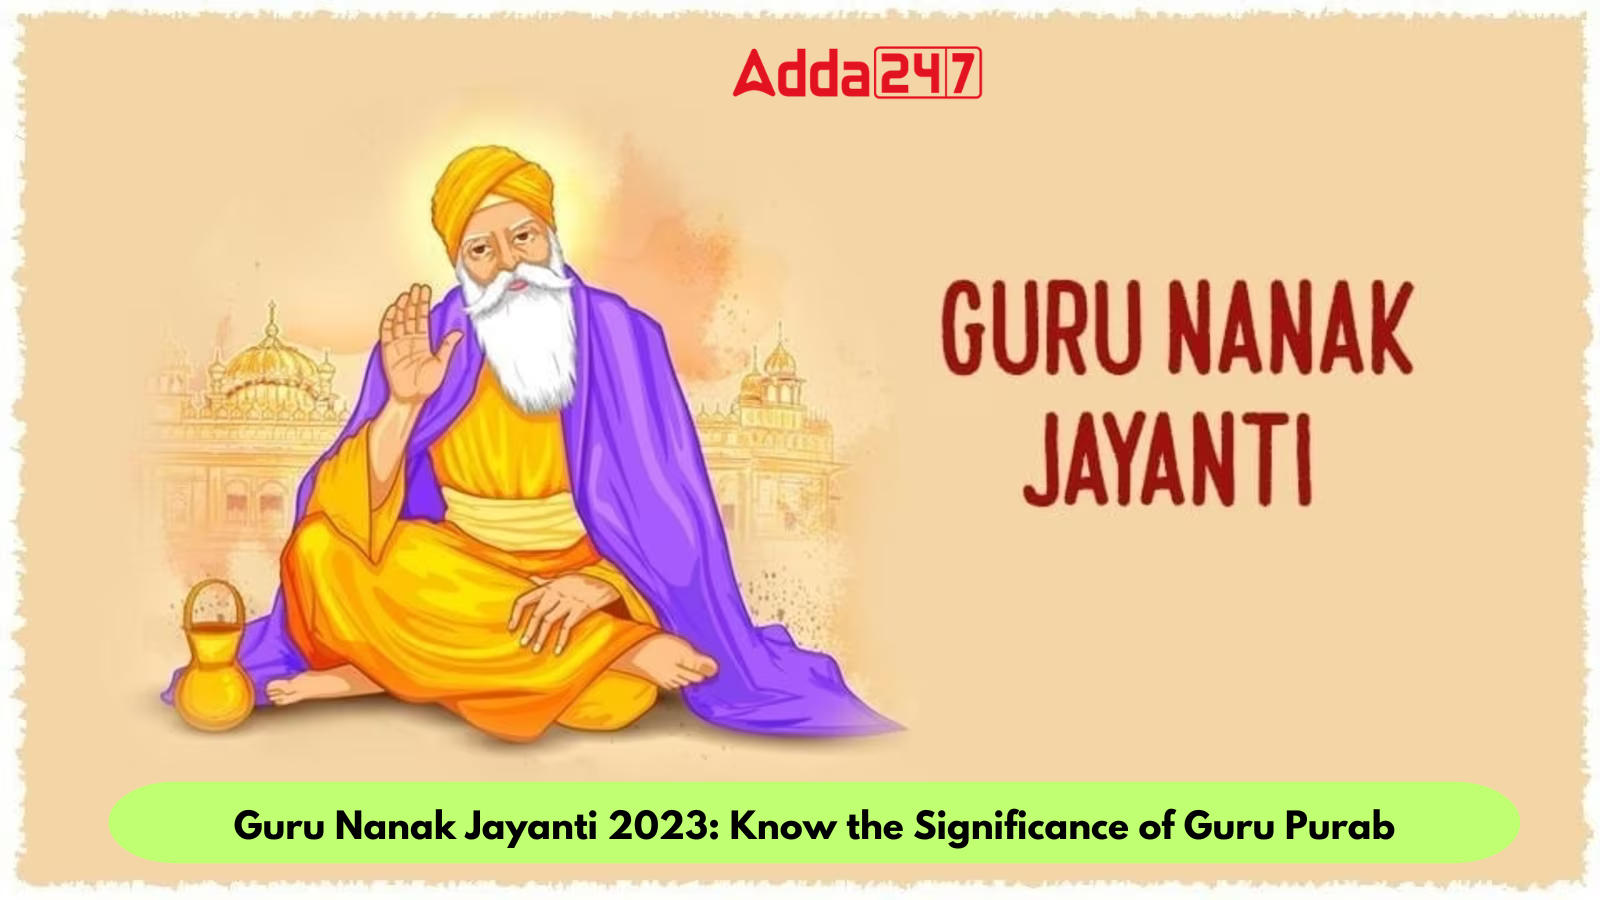 Guru Nanak Jayanti 2023: Know the Significance of Guru Purab